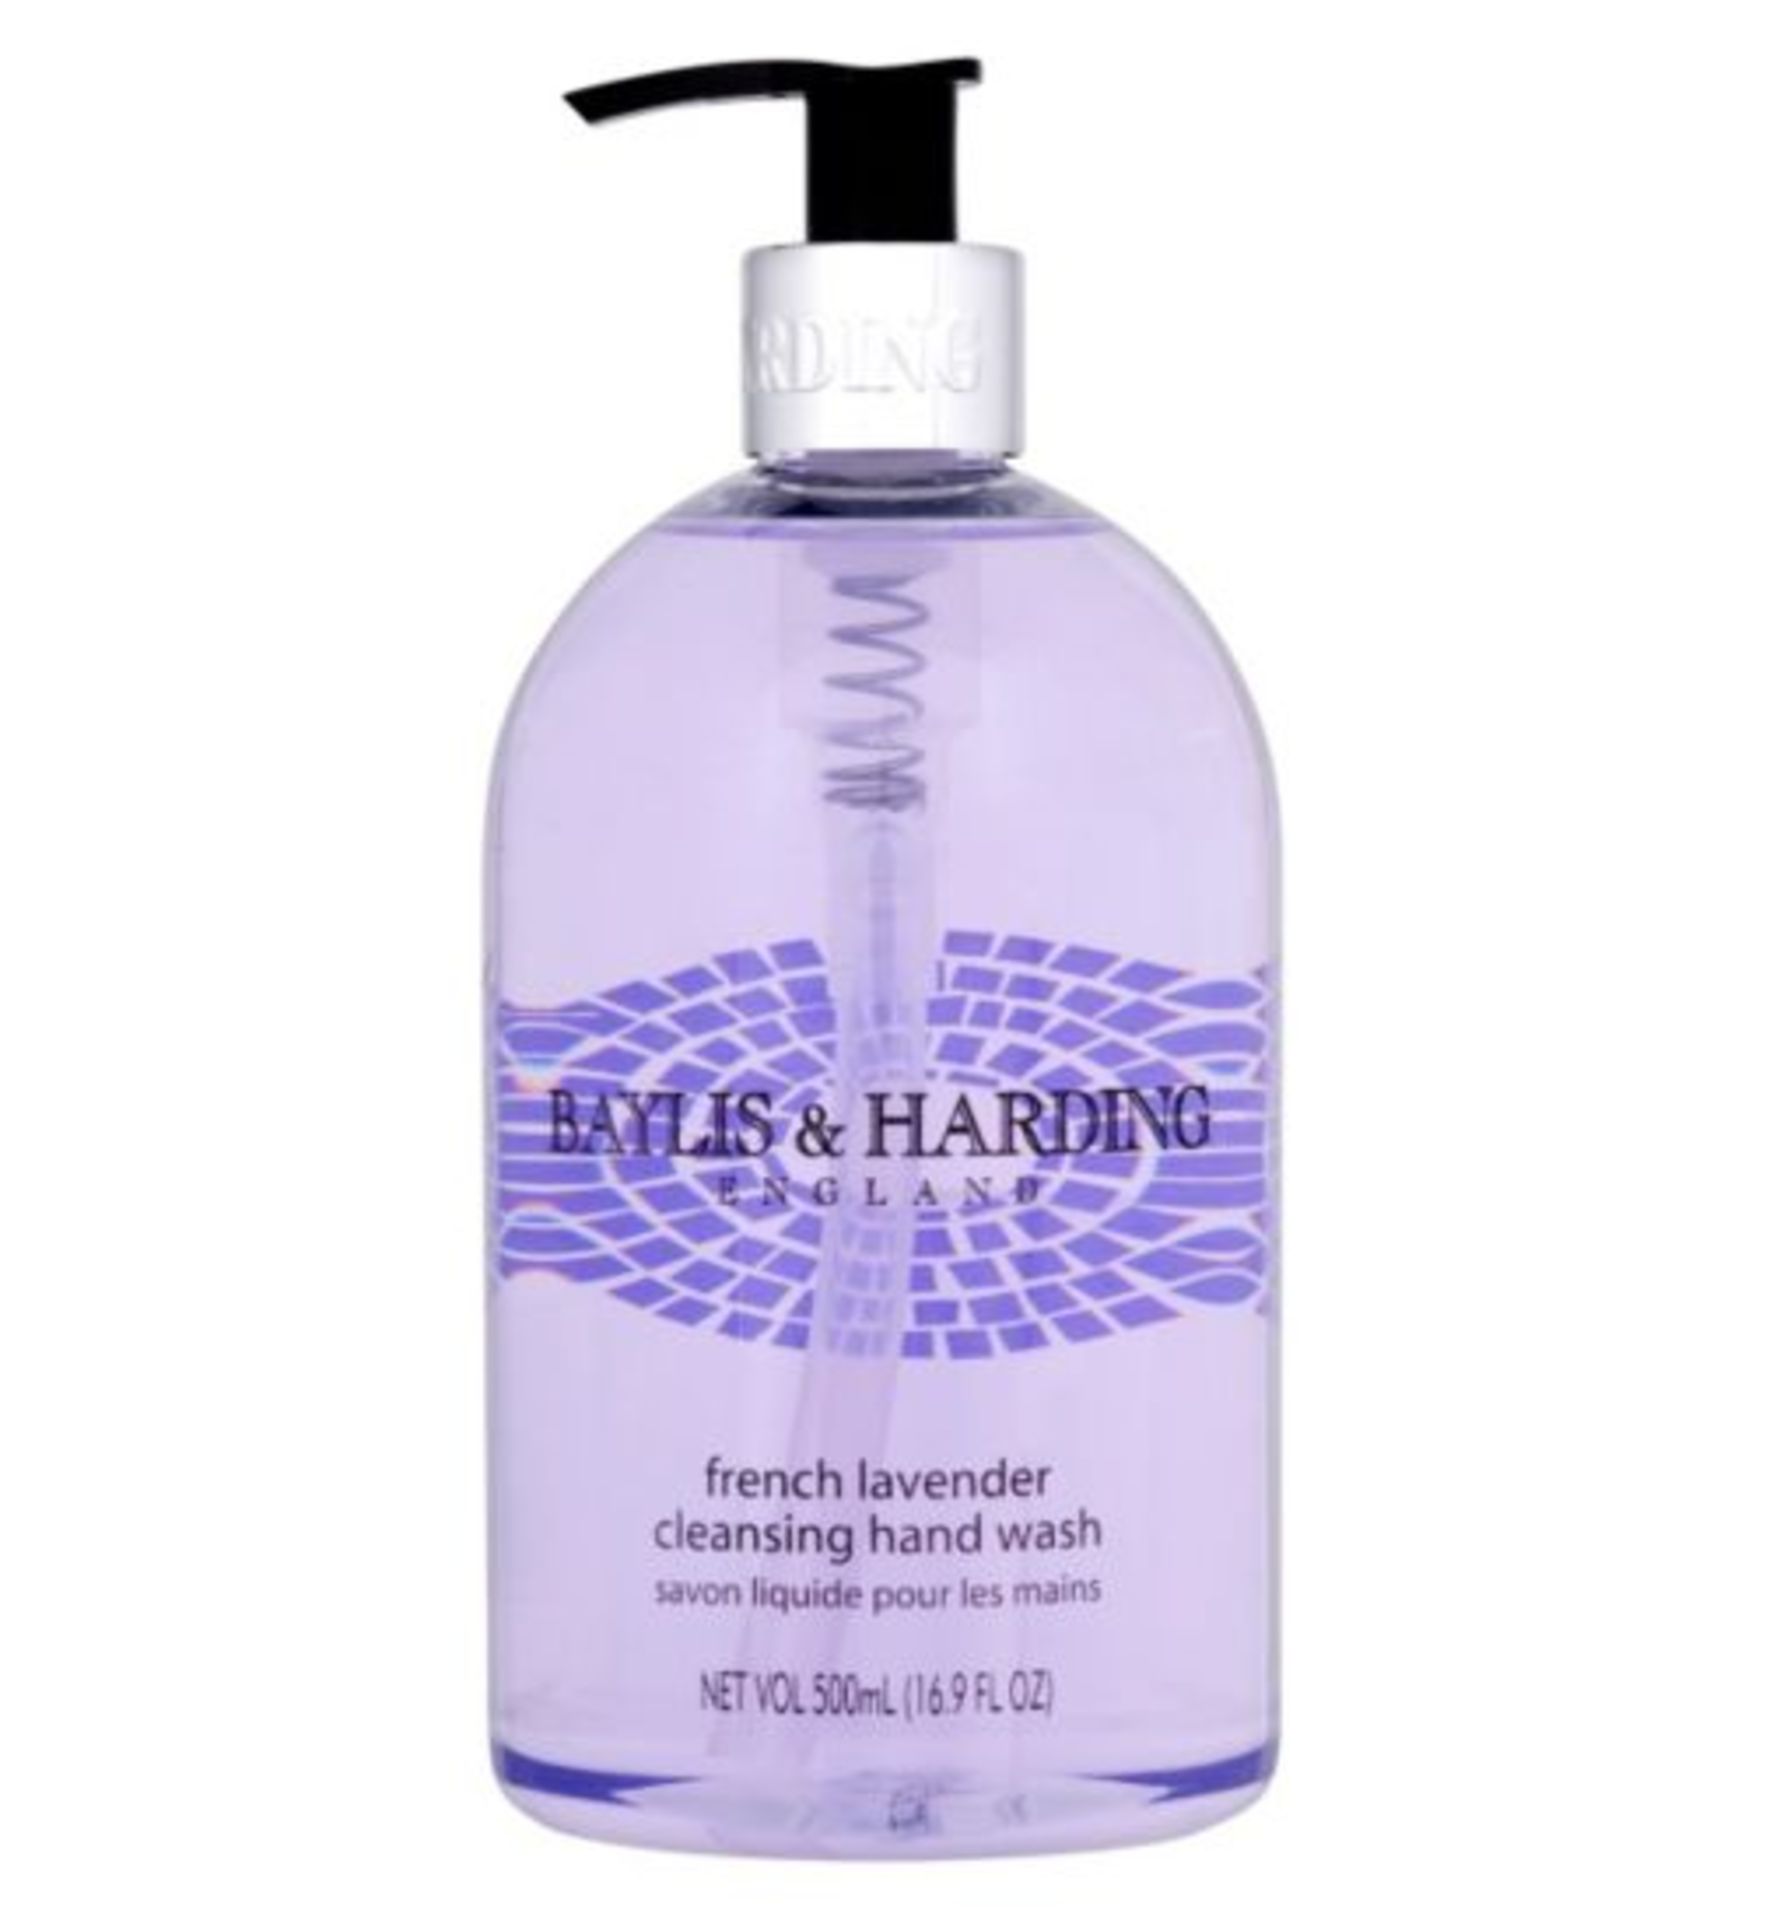 V Brand New 15 500ml Pump Bottles Of Baylis & Harding French Lavender Cleansing Hand Wash Total